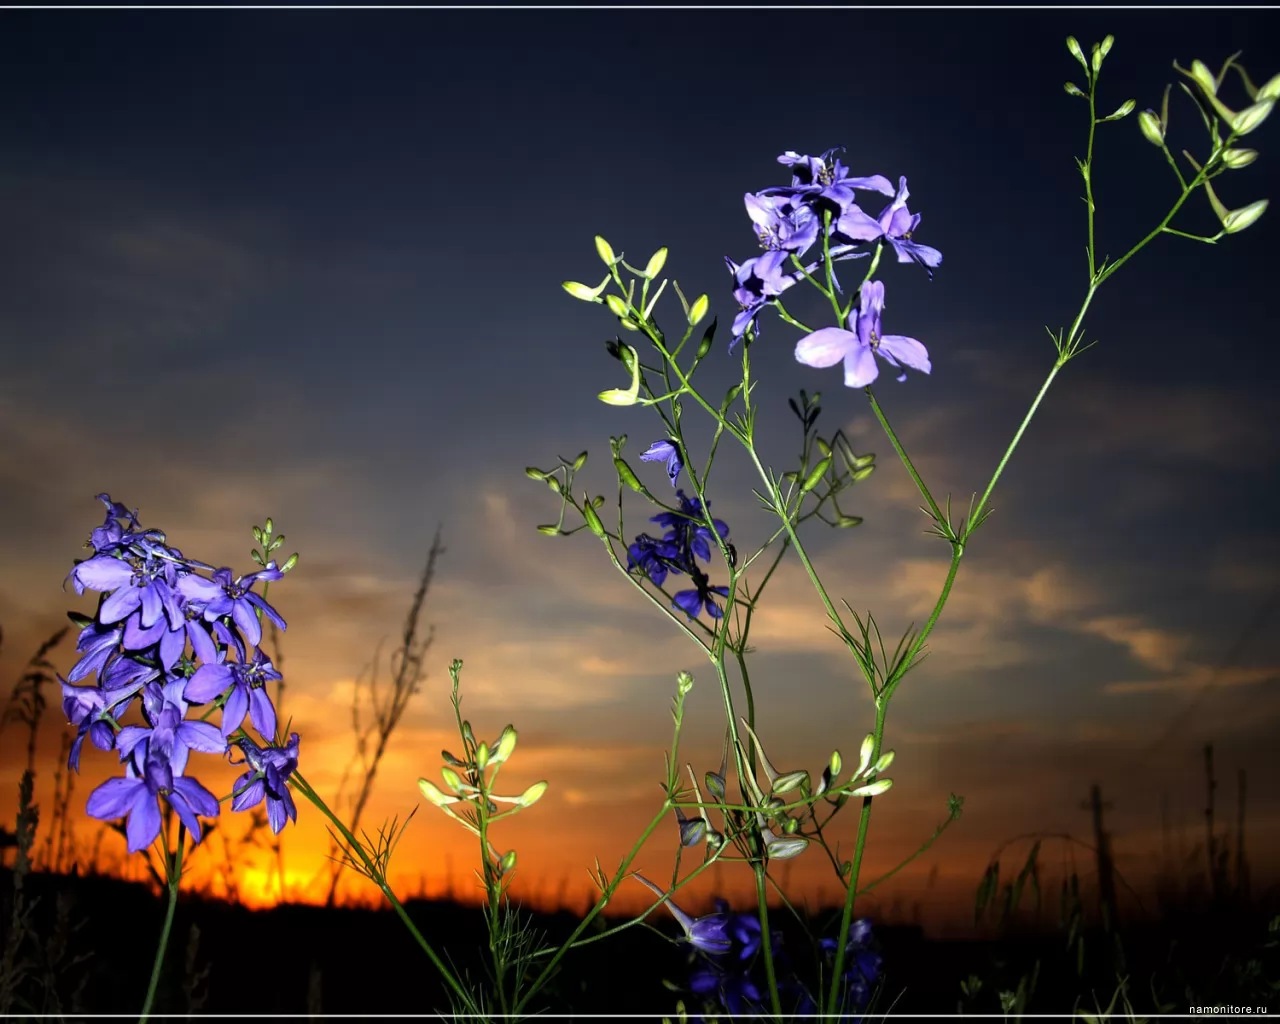 Meadow beauty, dark blue, flowers, nature, sunsets x